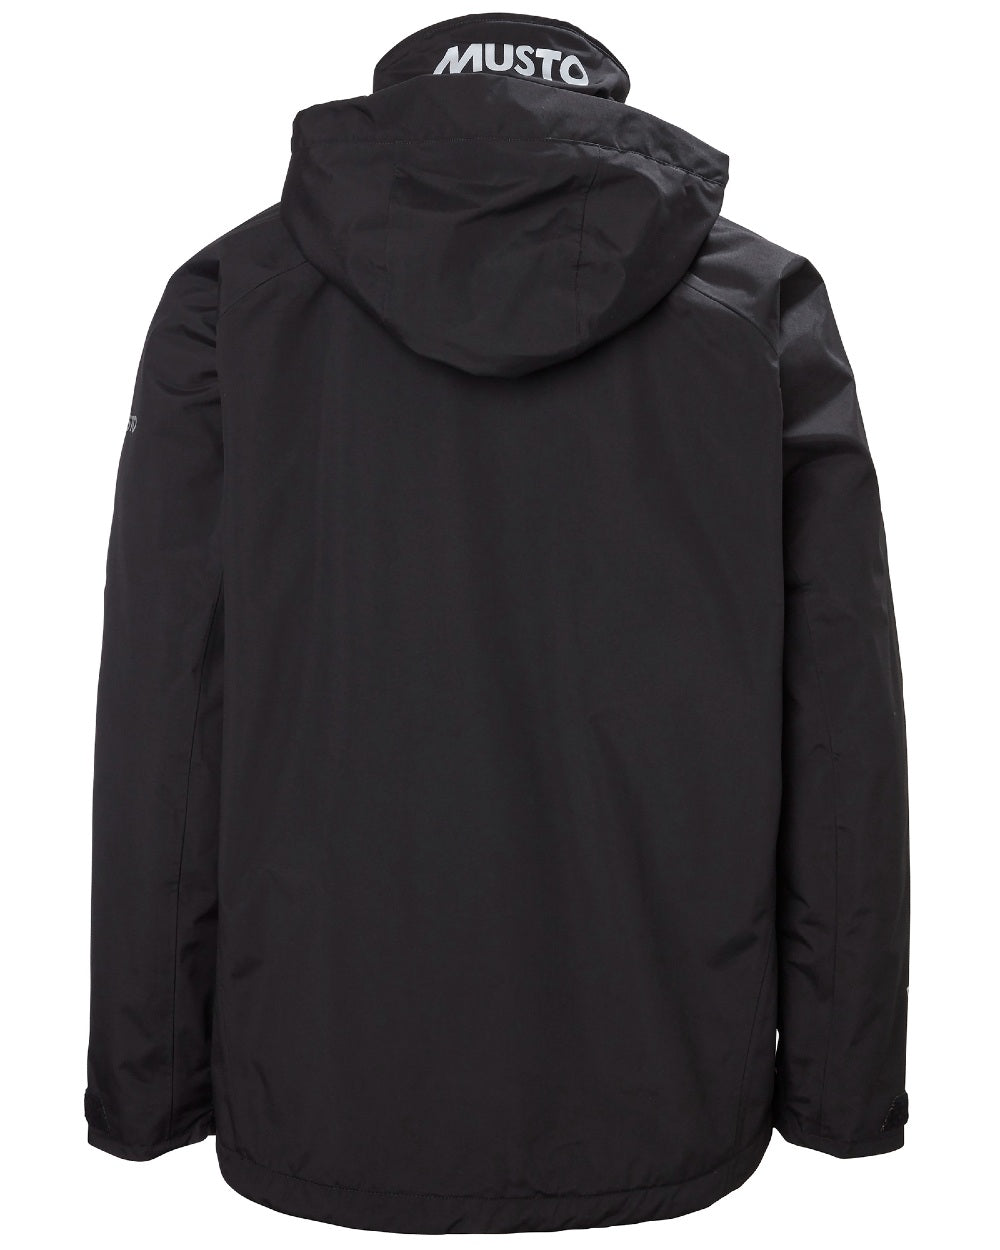 Musto Corsica Waterproof Jacket 2.0 in Black 